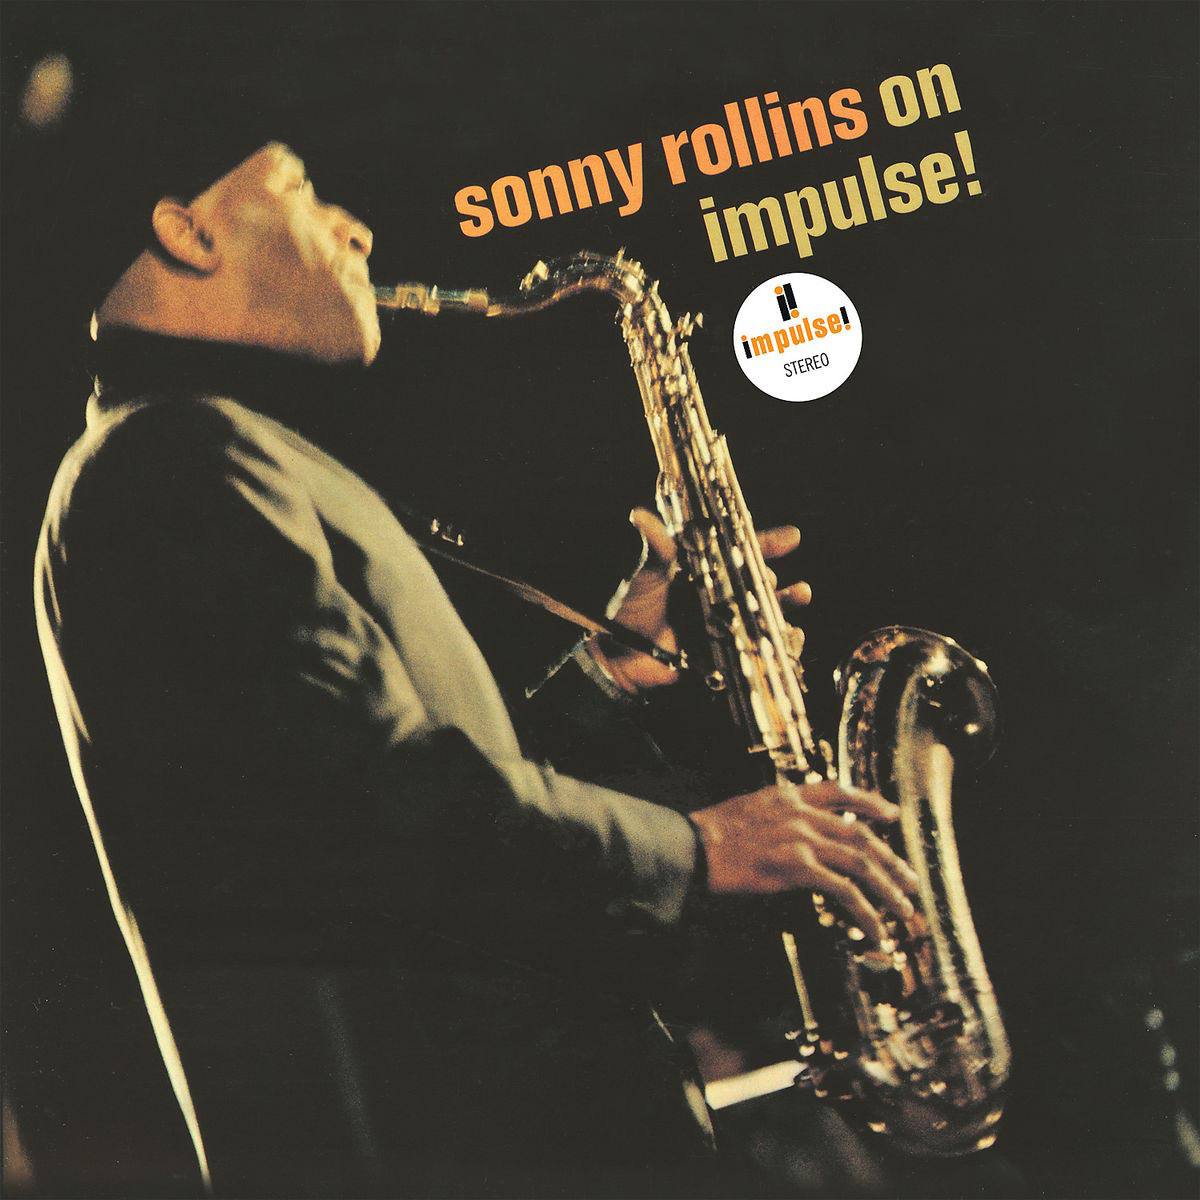 (Acoustic (Vinyl) Sounds) On Impulse! Sonny - - Rollins